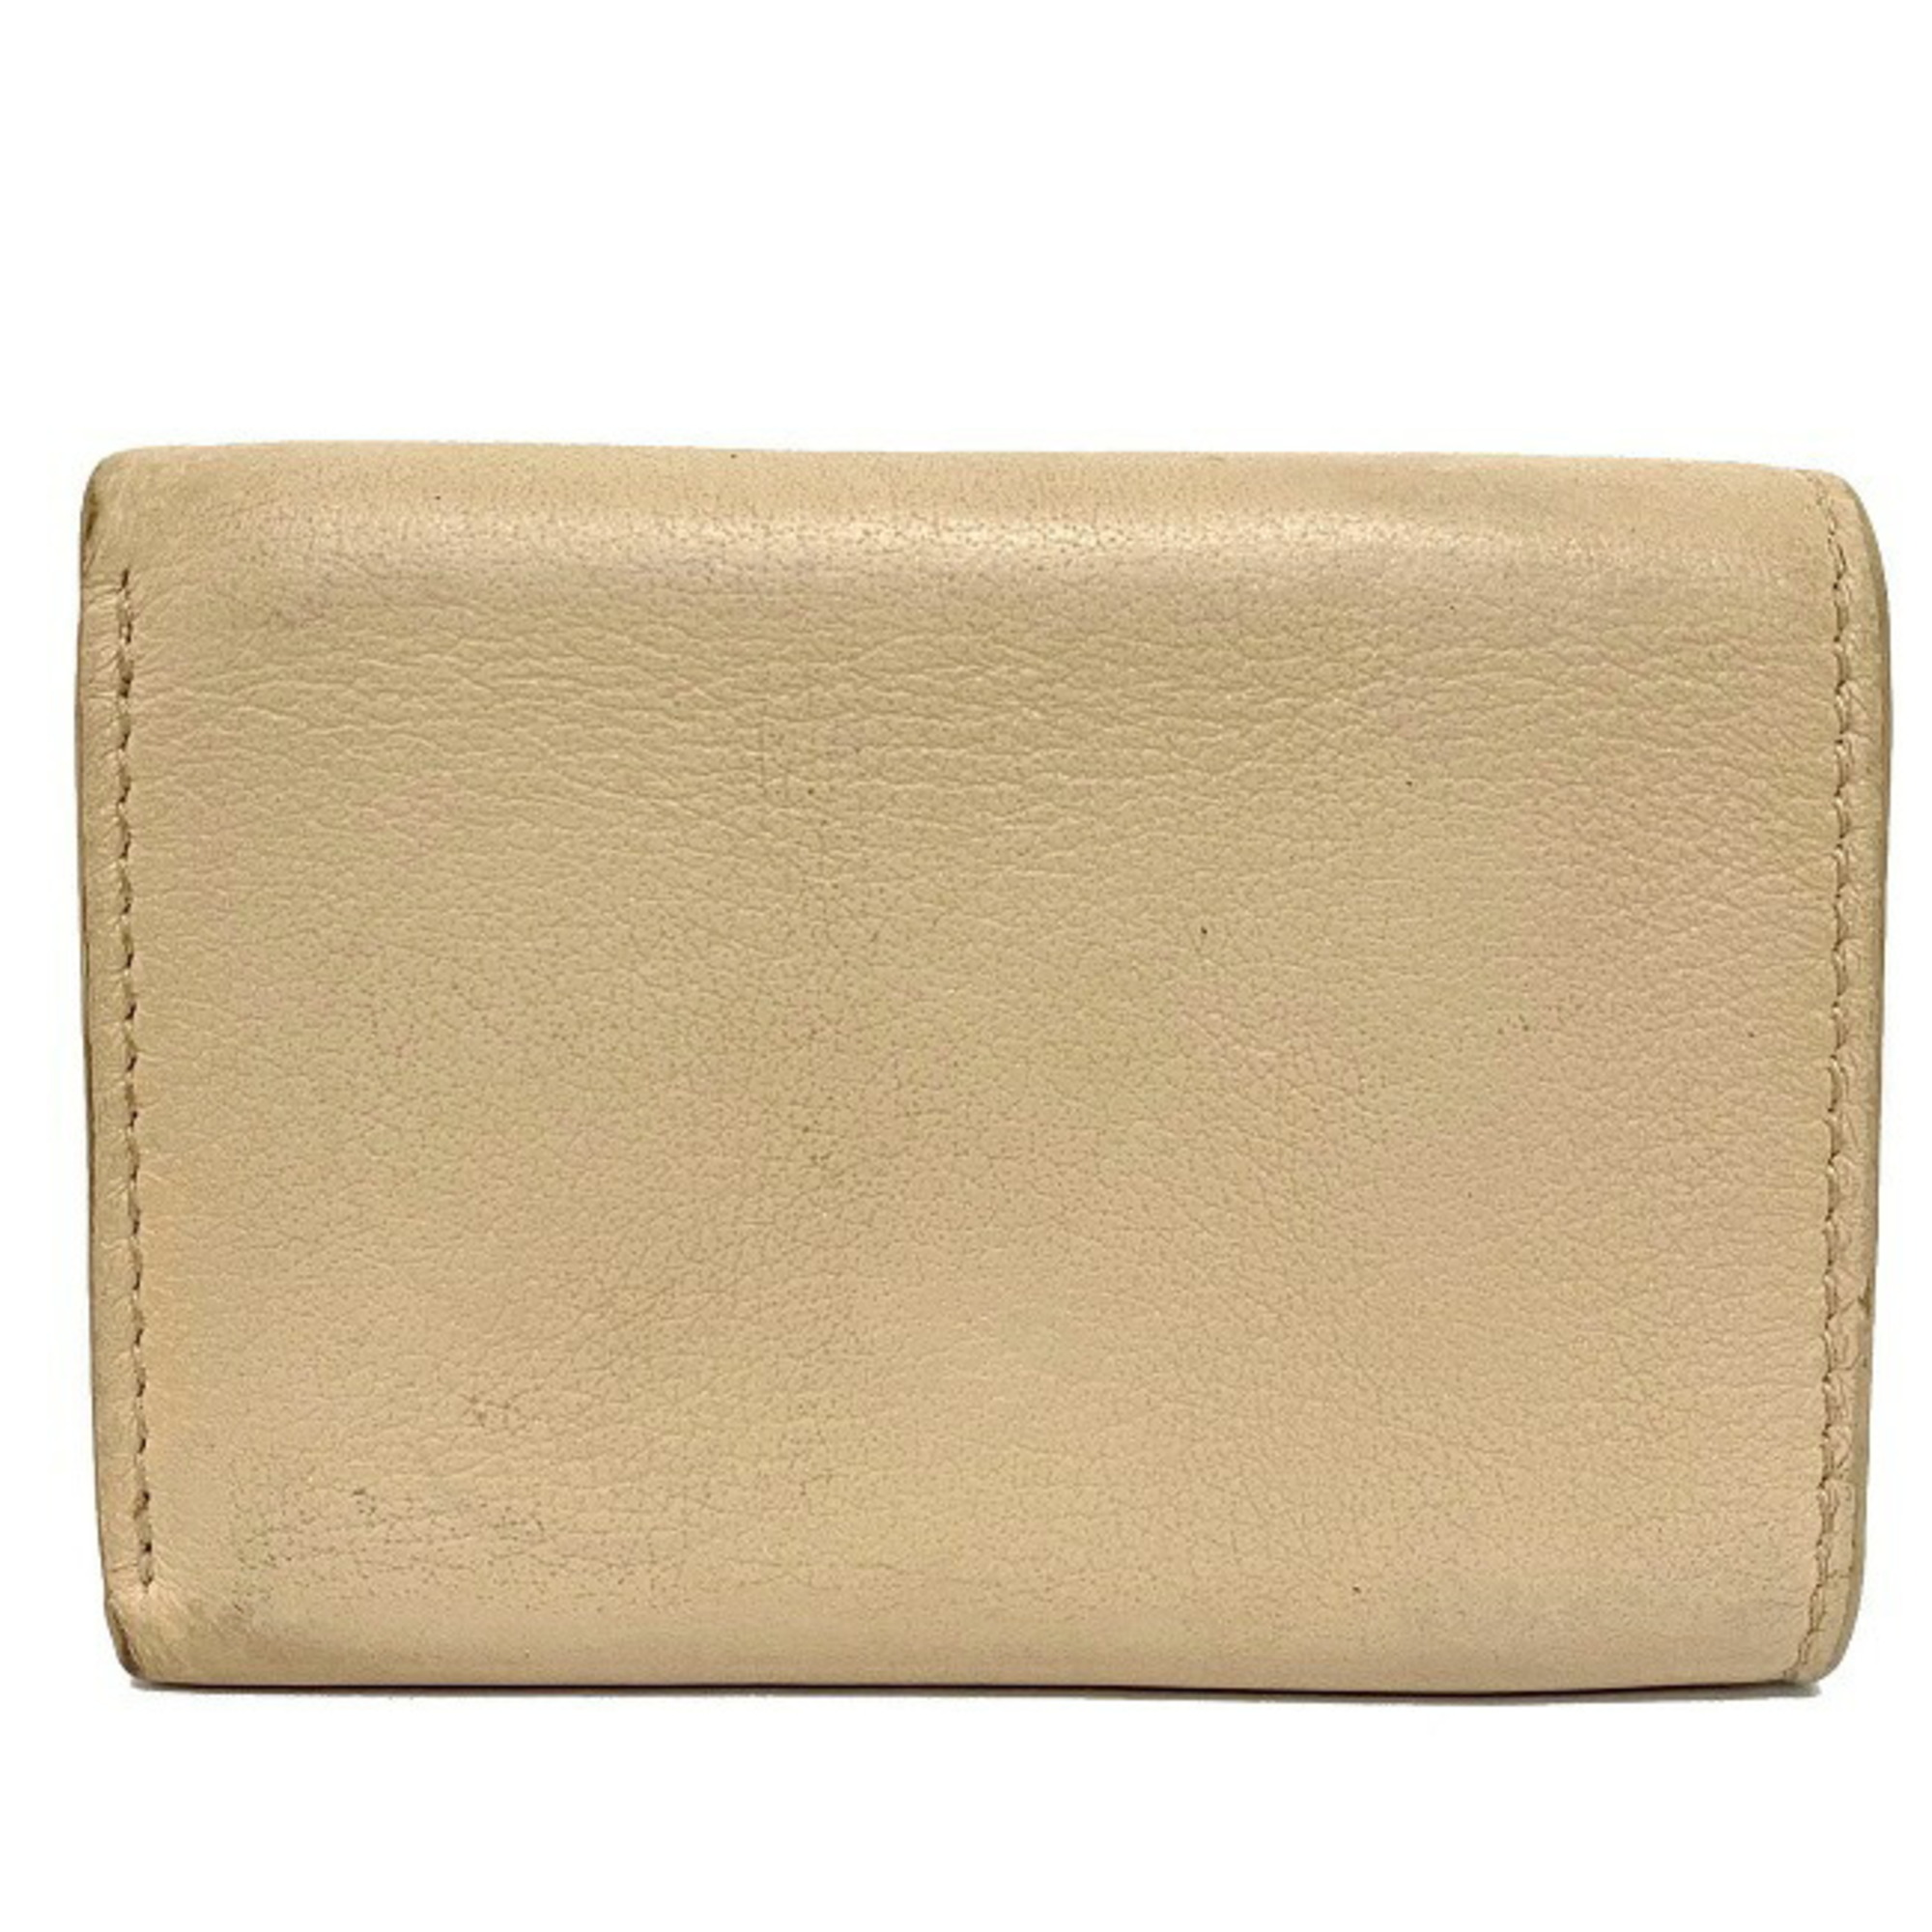 Balenciaga Women's Leather Wallet (tri-fold) Beige